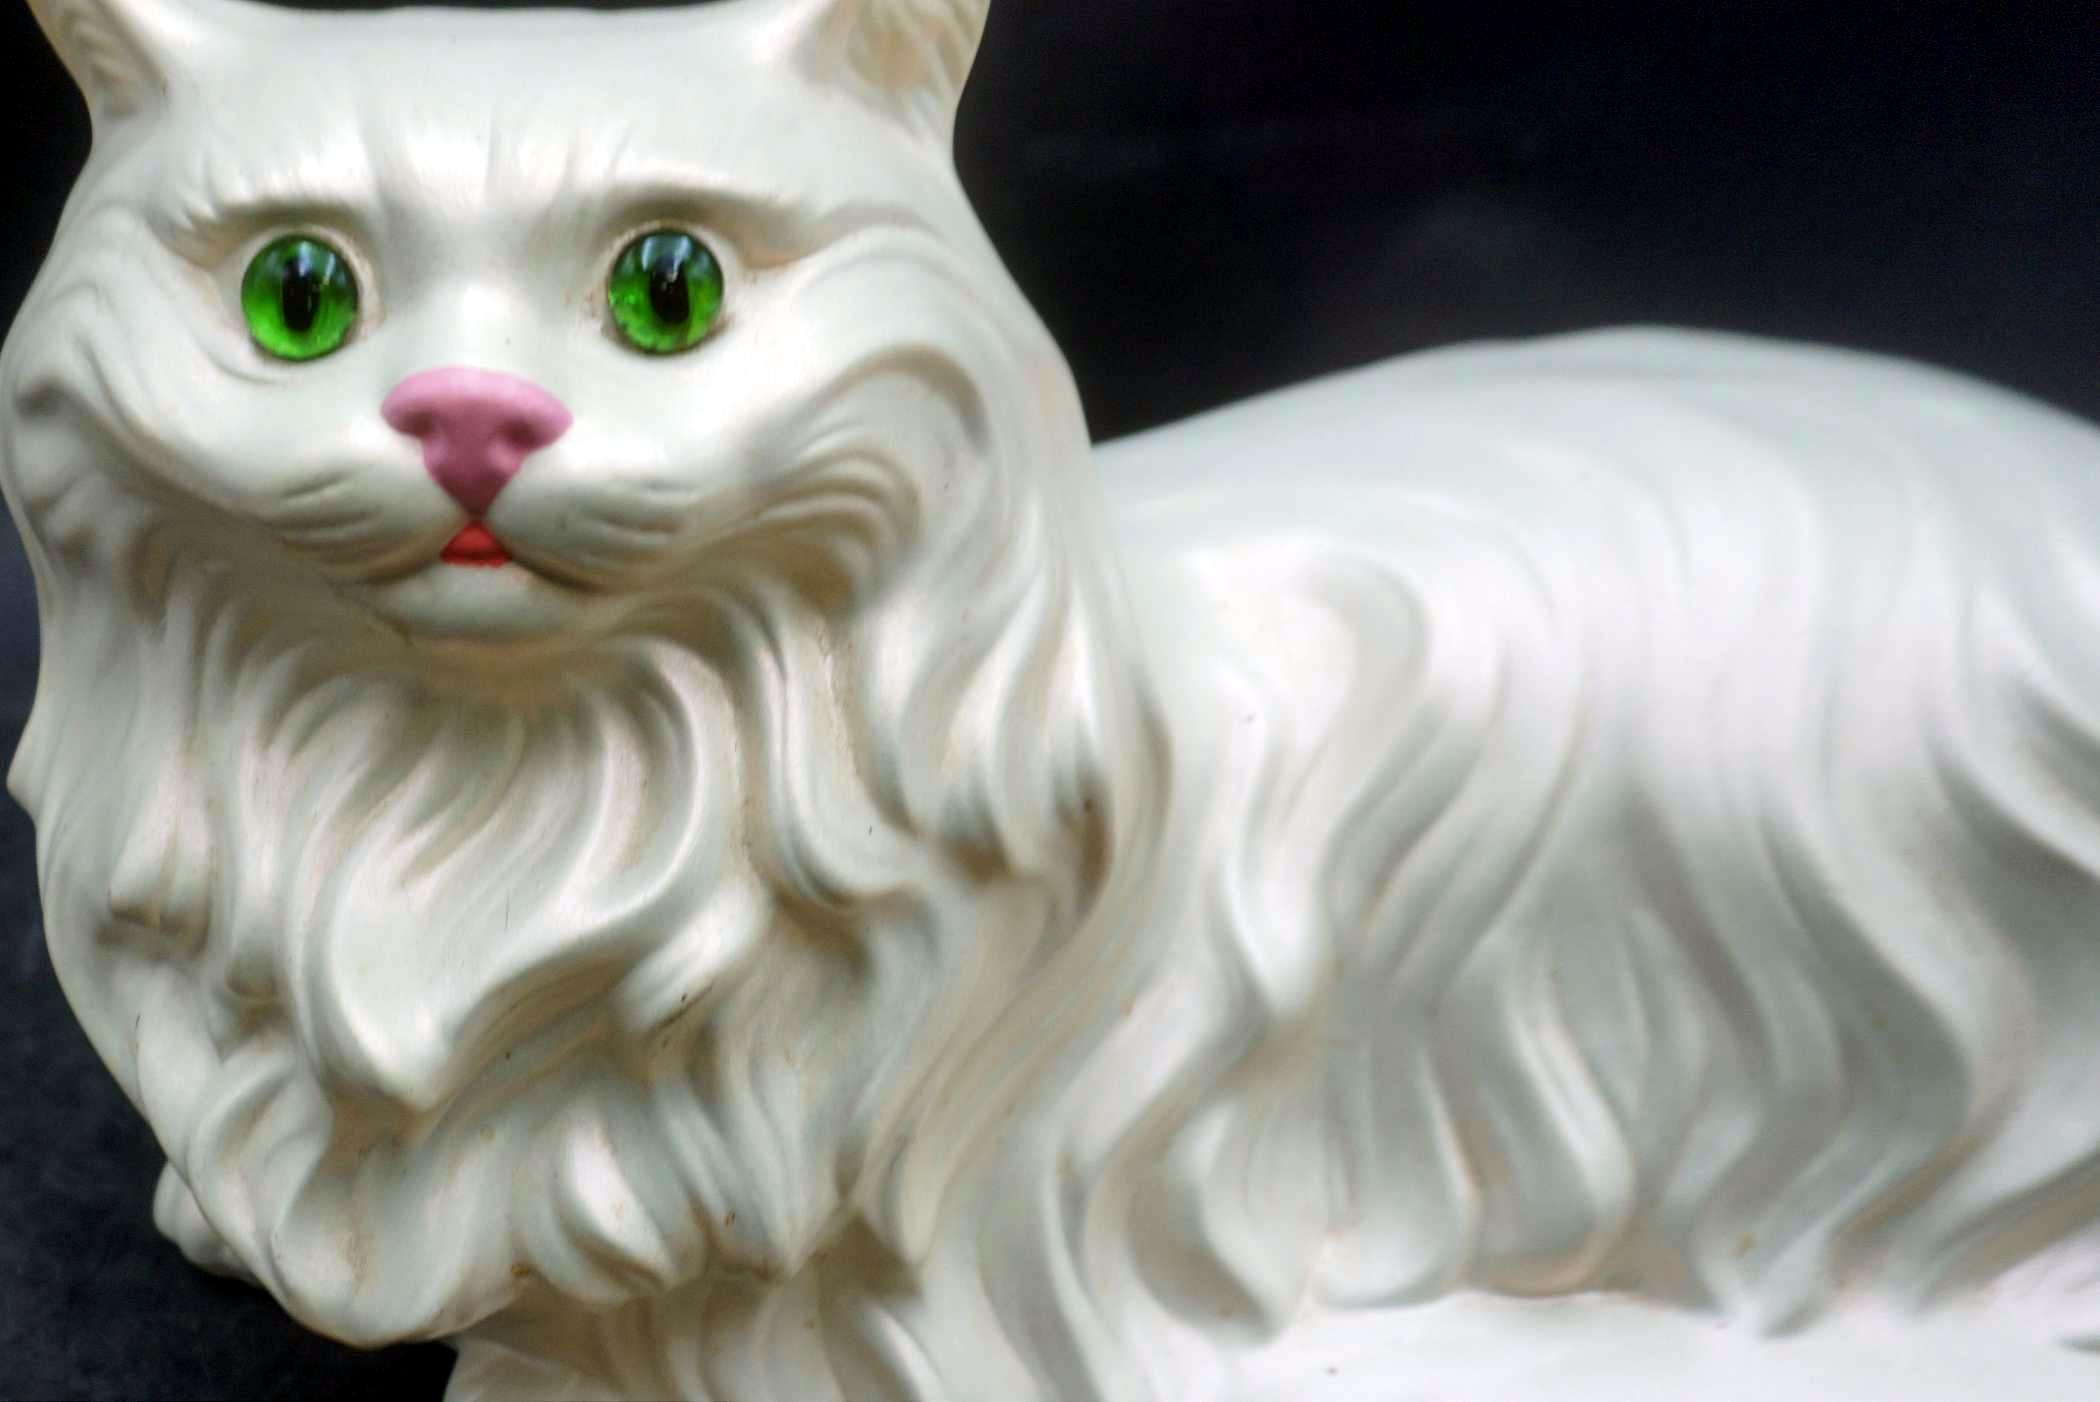 White Cat Figurine